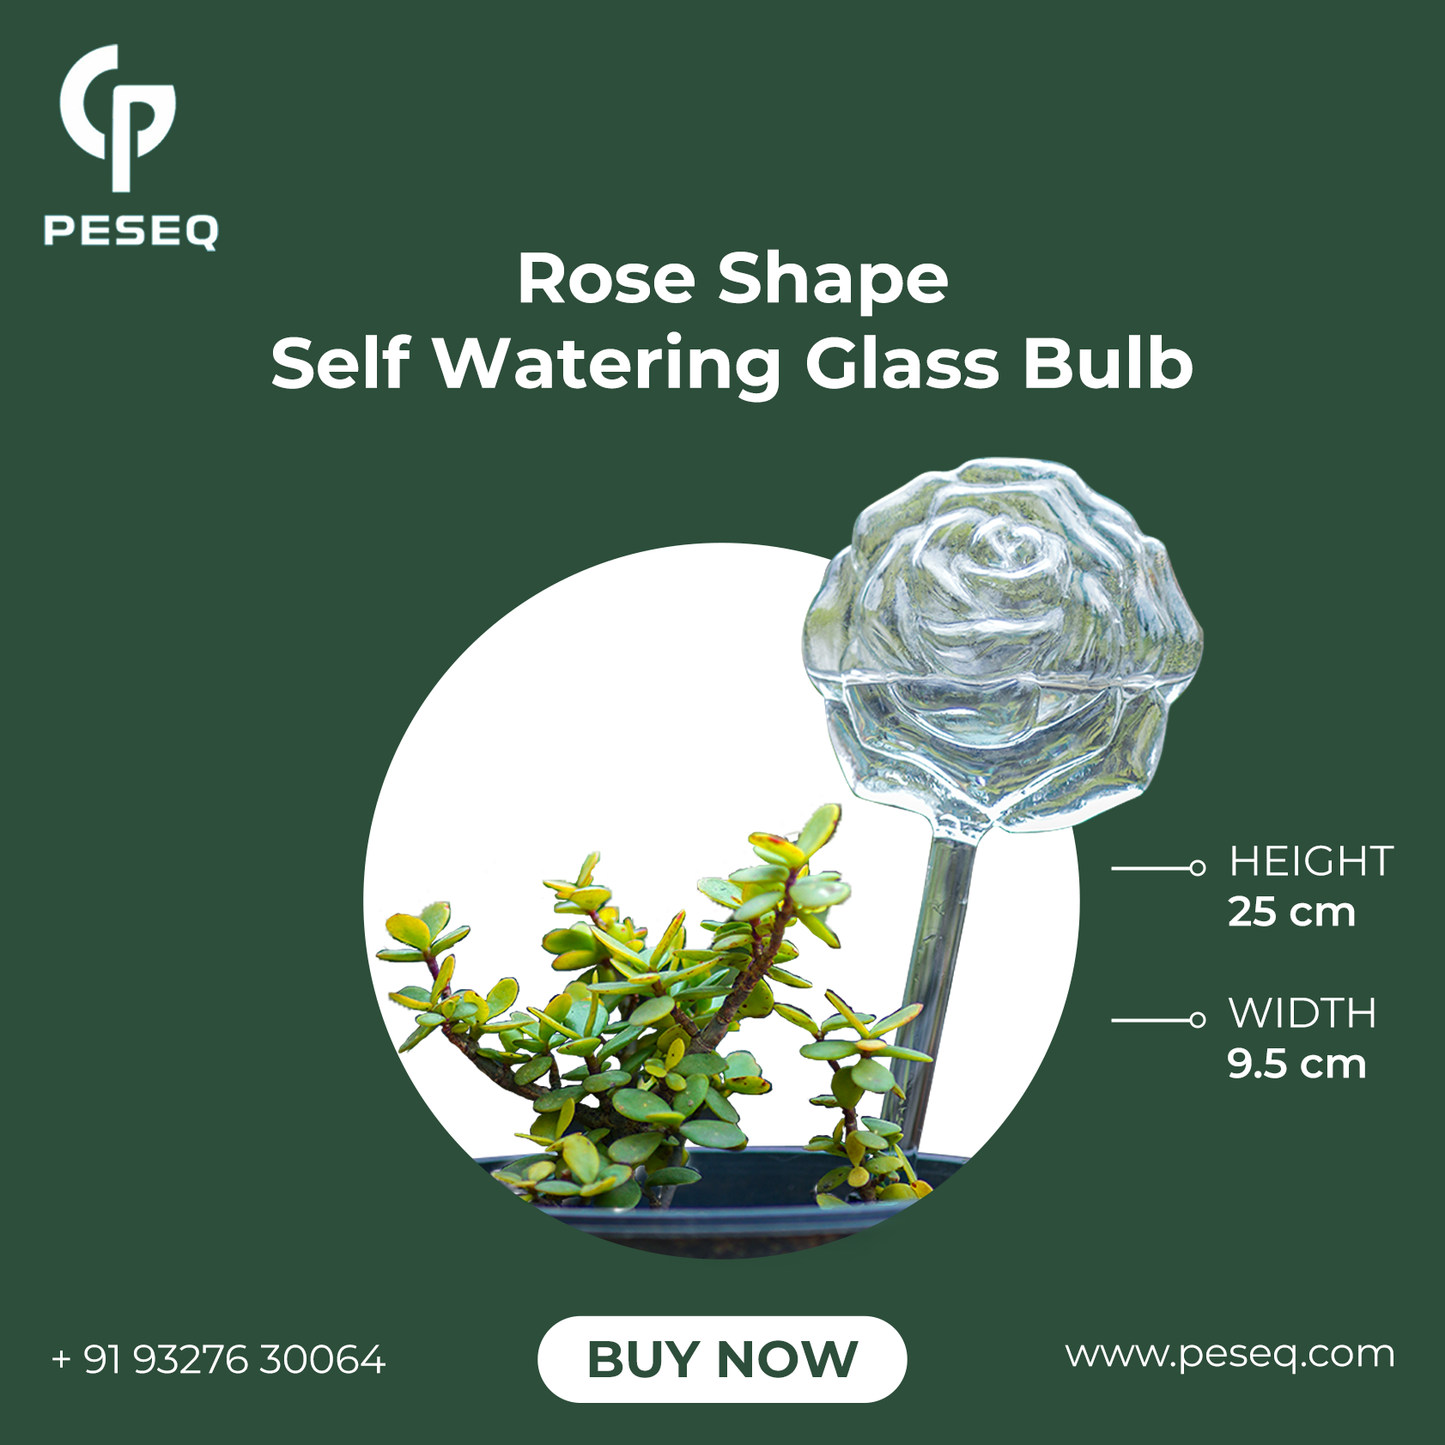 Rose Shape Self Watering Glass Bulb